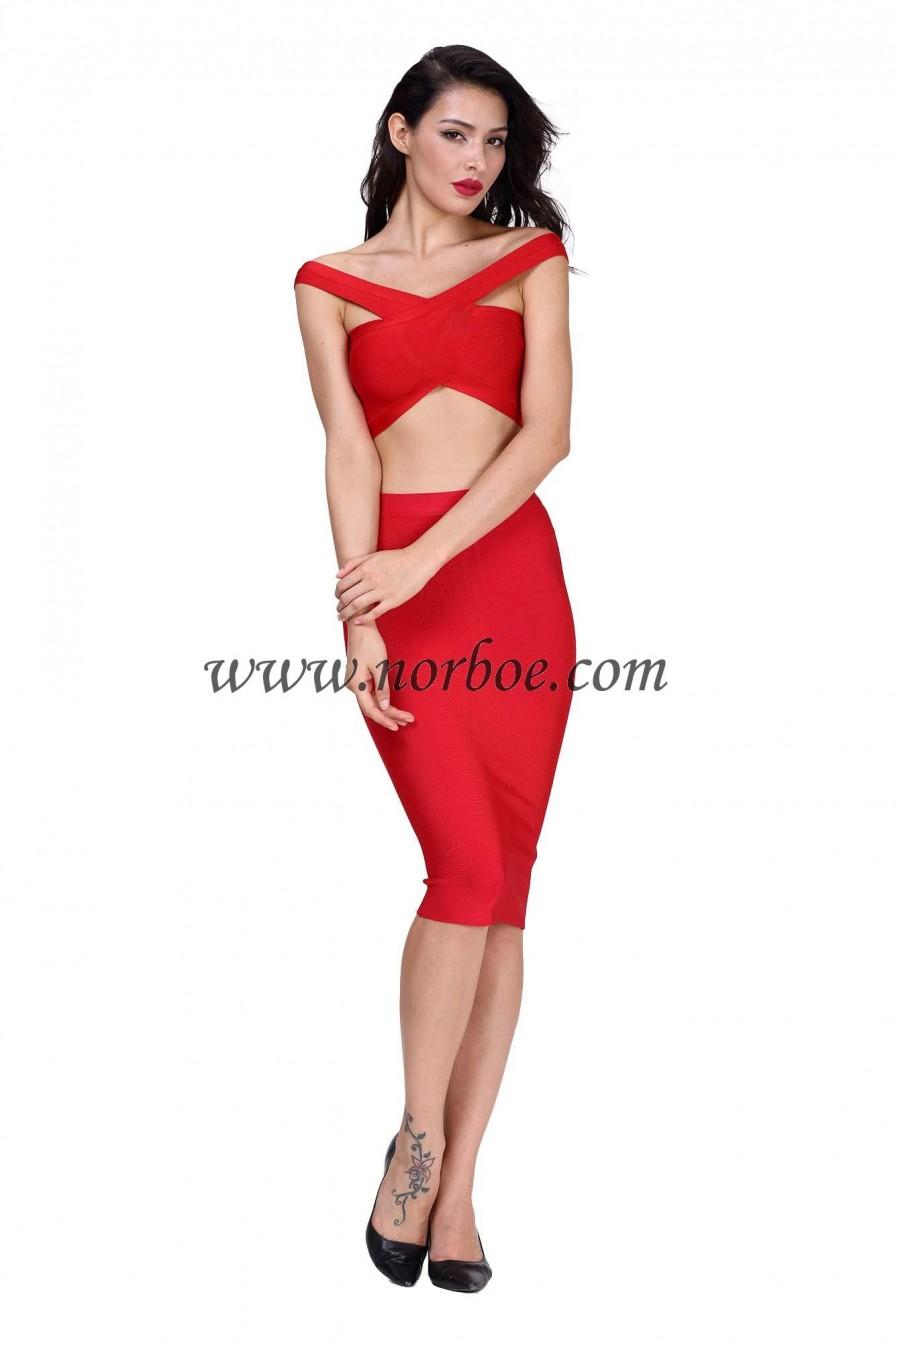 Wedding - Norboe The Celebrity Red Bandage Dress